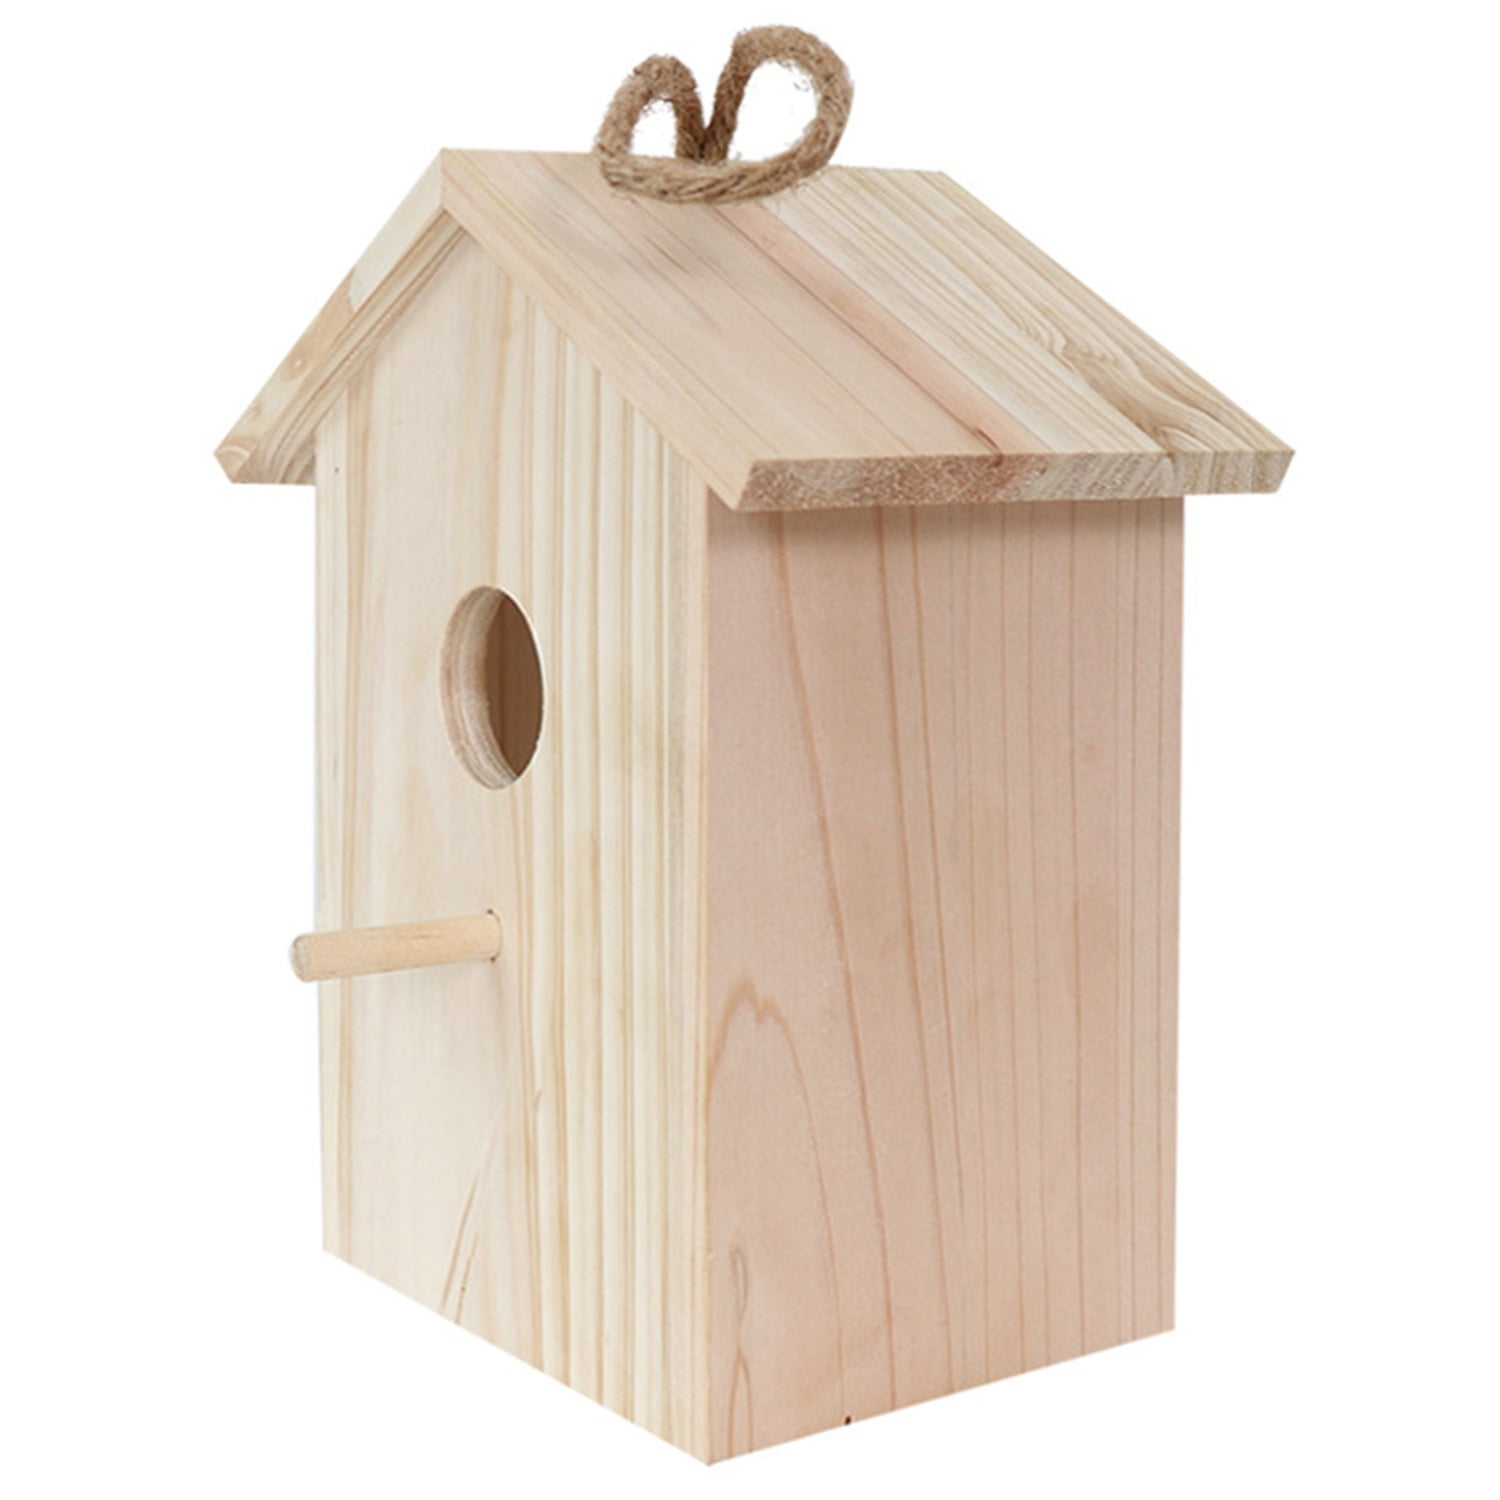 4pcs Bird House Wooden Nesting Box Wood Nest Birdhouse Garden Decor Feeder Roof 